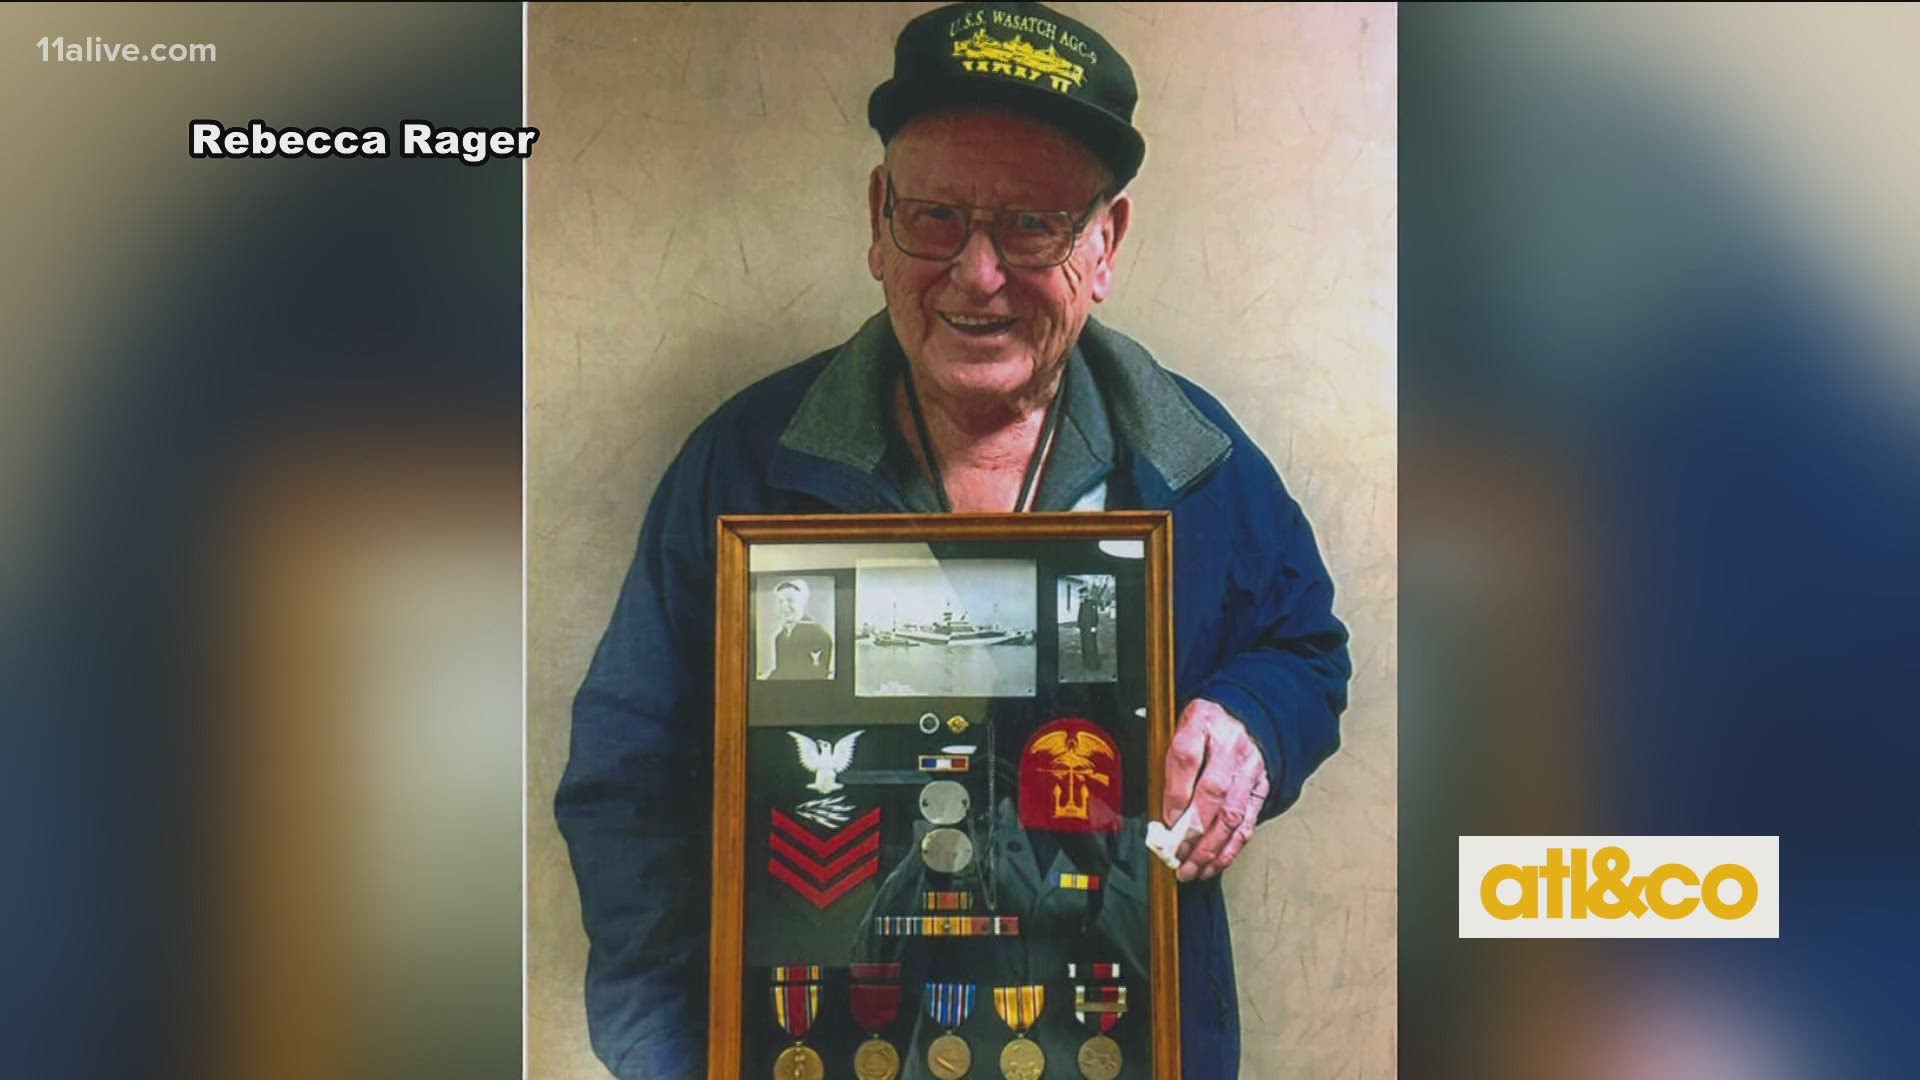 World War II veteran Al Zieg celebrates his 97th birthday with kind cards from around the world.